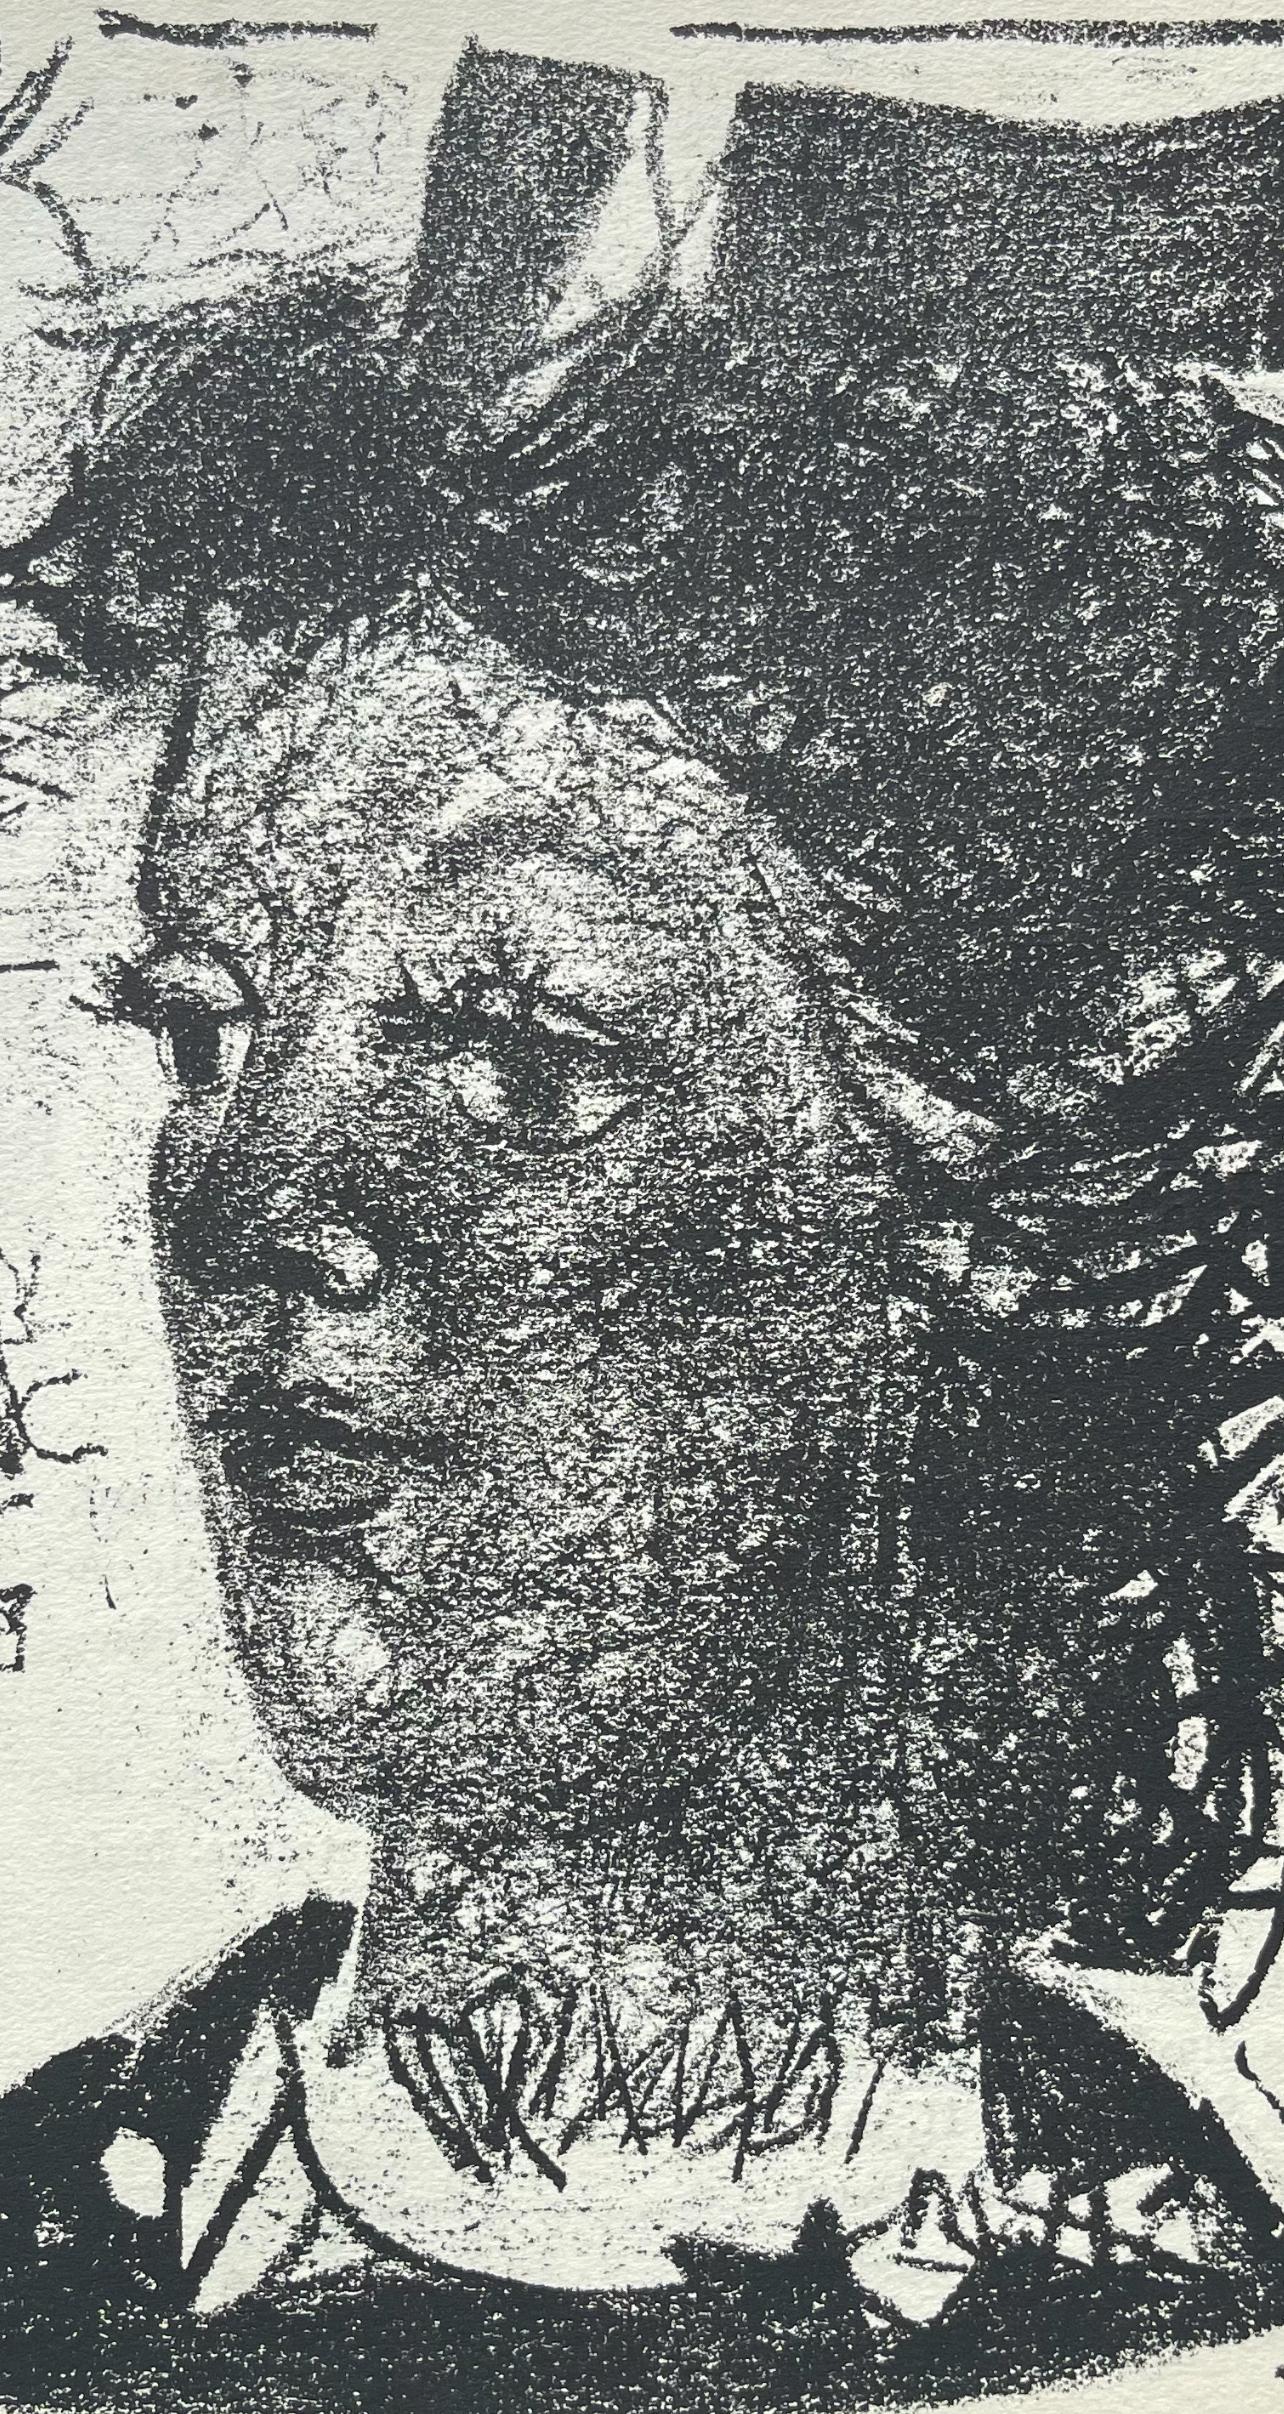 Marchand, Composition, pierre ã feu provence noire  (after) - Print by André Marchand